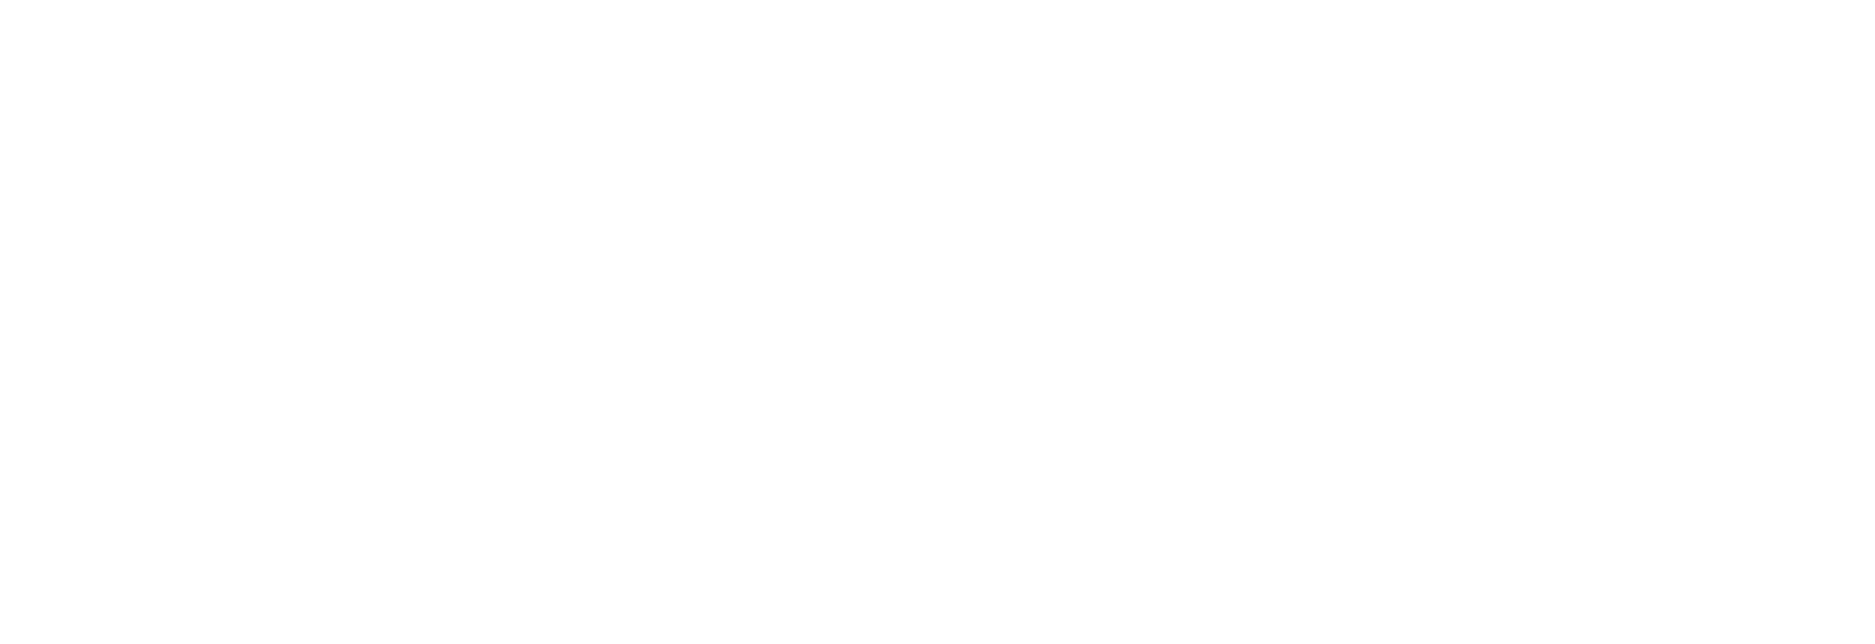 CBLJ Awards Gallery With Line